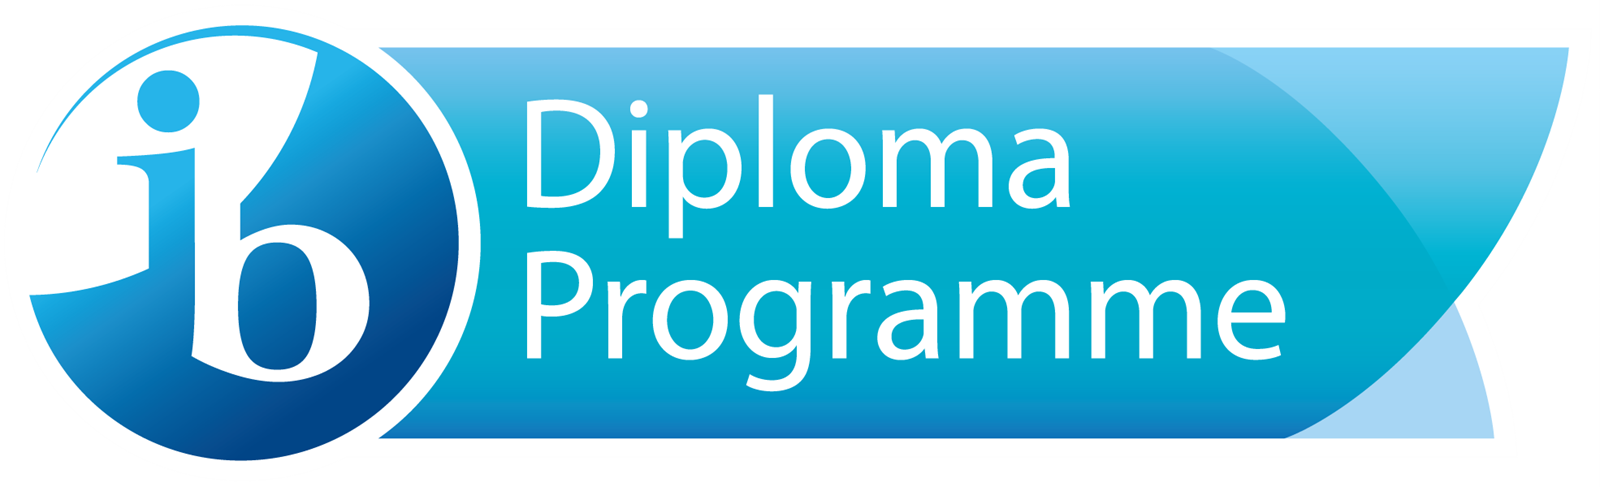 dp-programme-logo-en-1.png